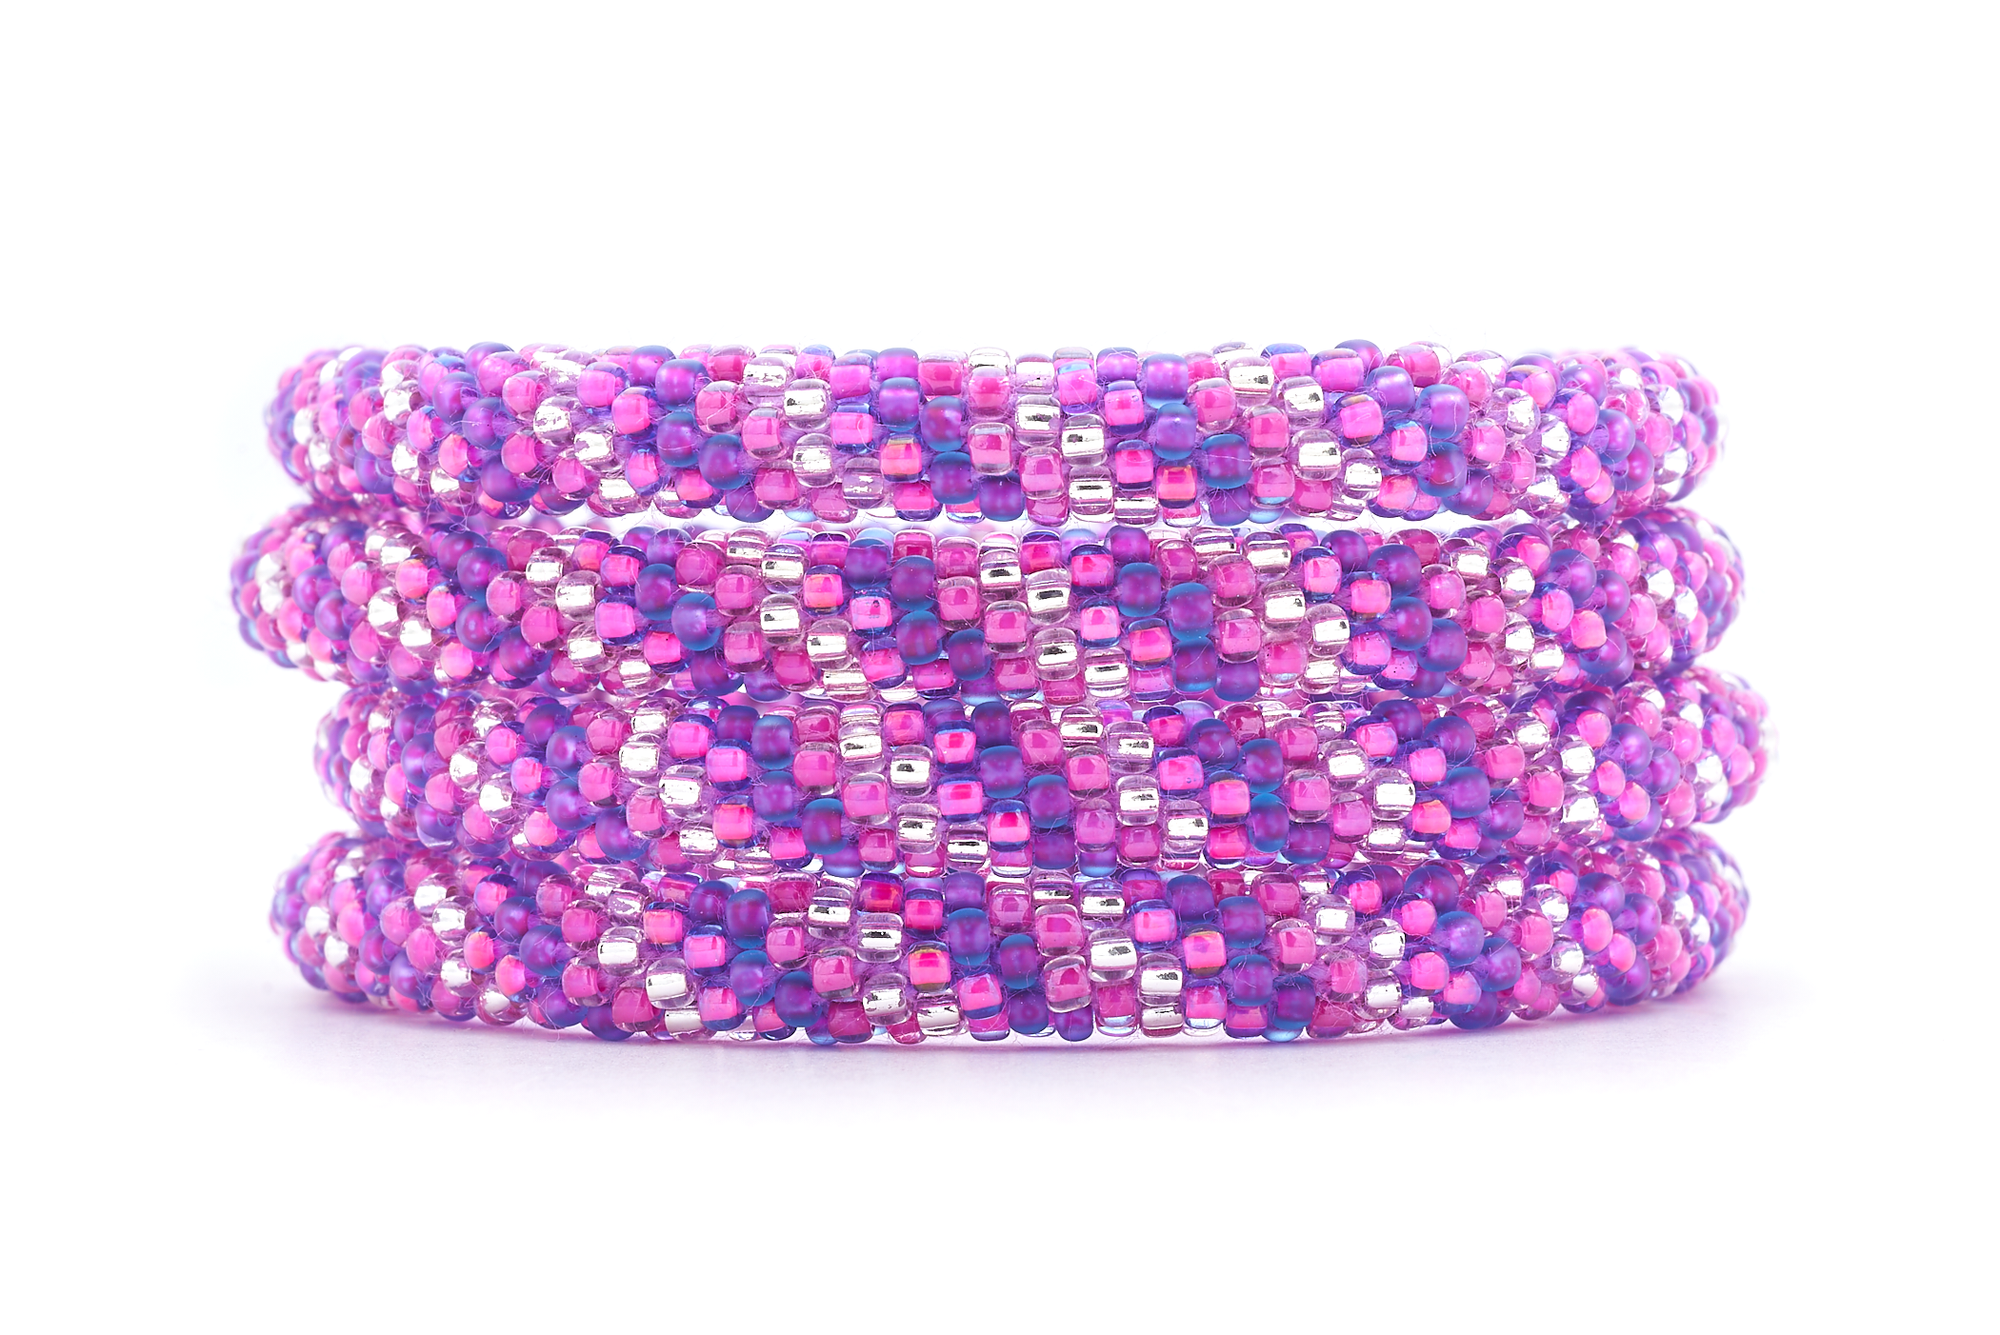 Sashka Co. Extended 8" Bracelet Purple / Pink / Clear Raspberry Radiance Bracelet - Extended 8"